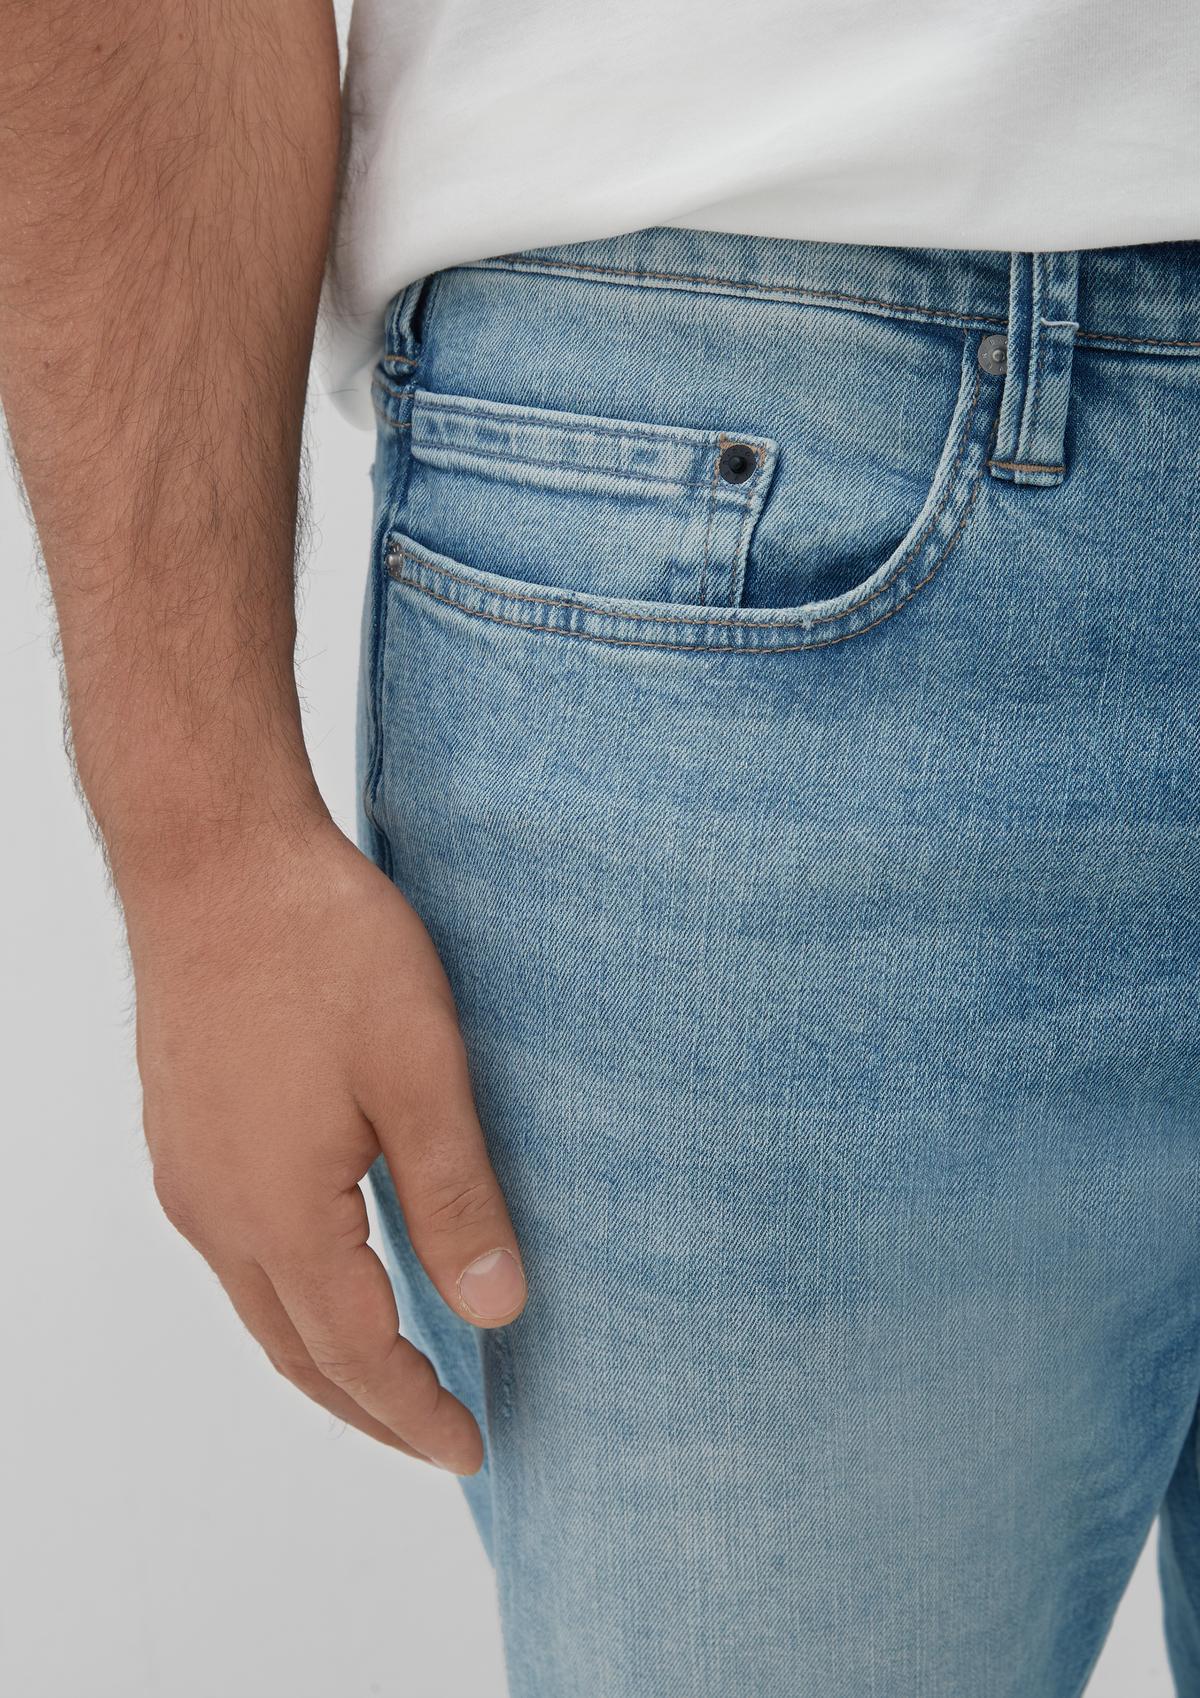 s.Oliver Regular: jeans with distressed details